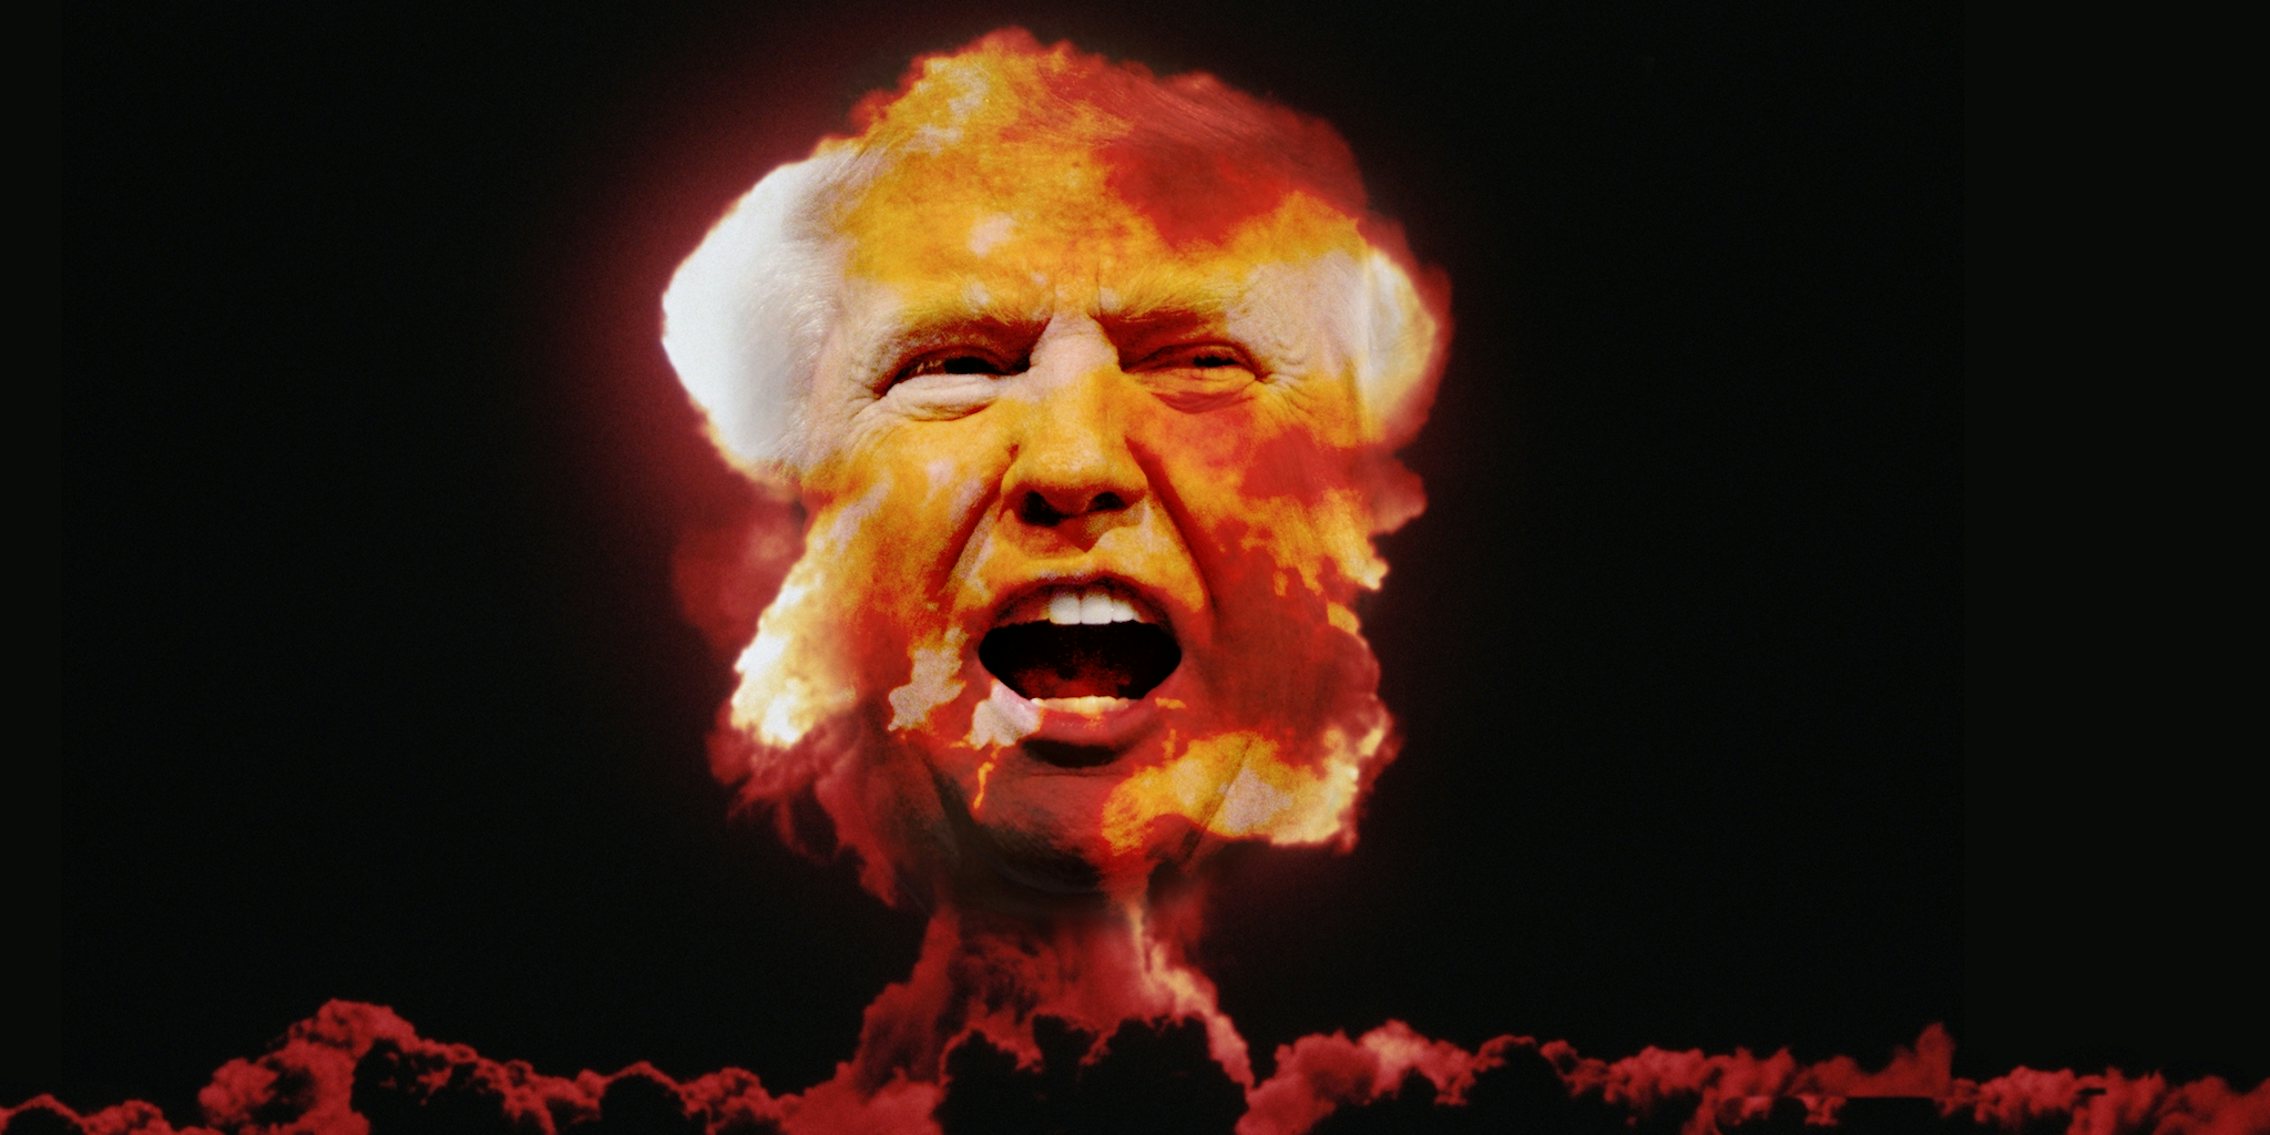 Donald Trump as a nuclear explosion